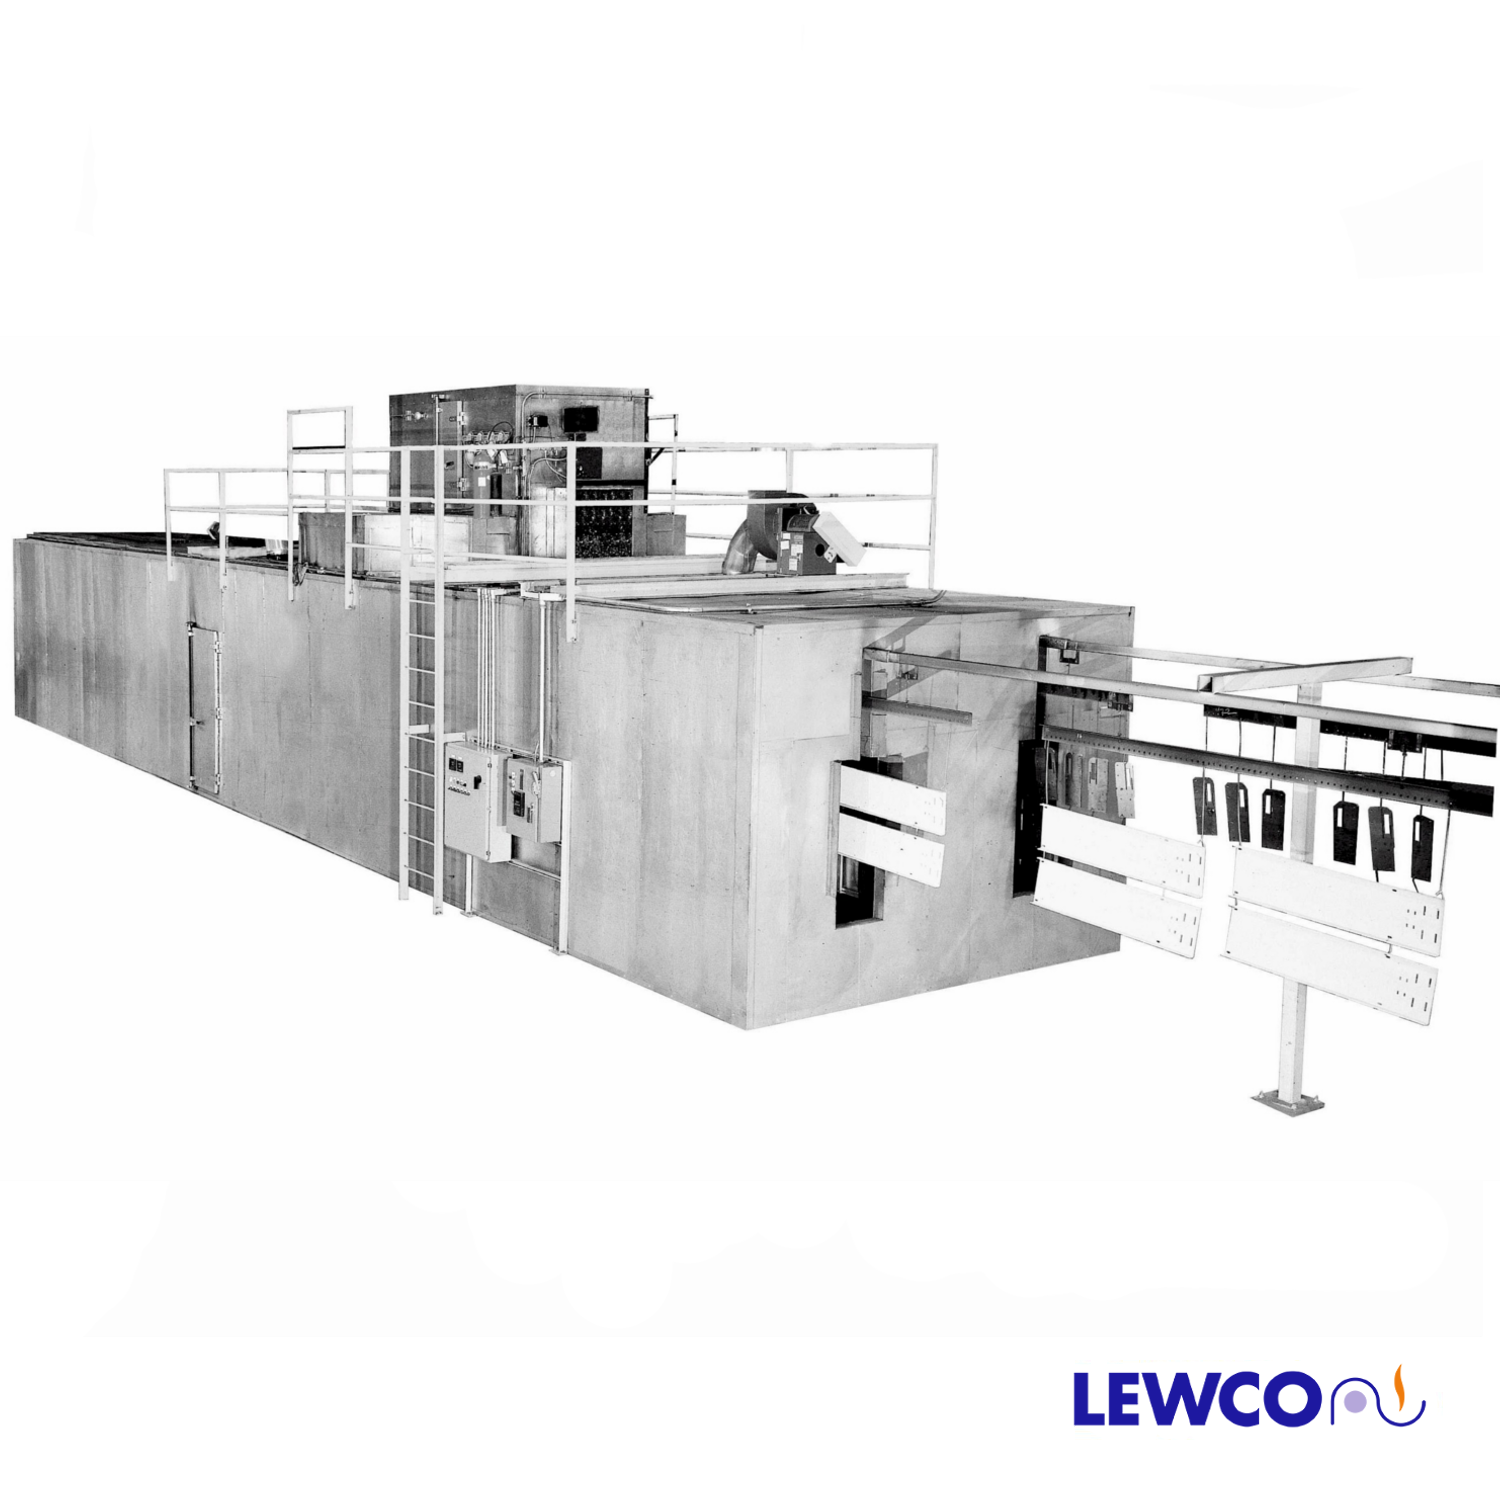 Powder Coating Oven  LEWCO, Inc. Industrial Oven Manufacturer